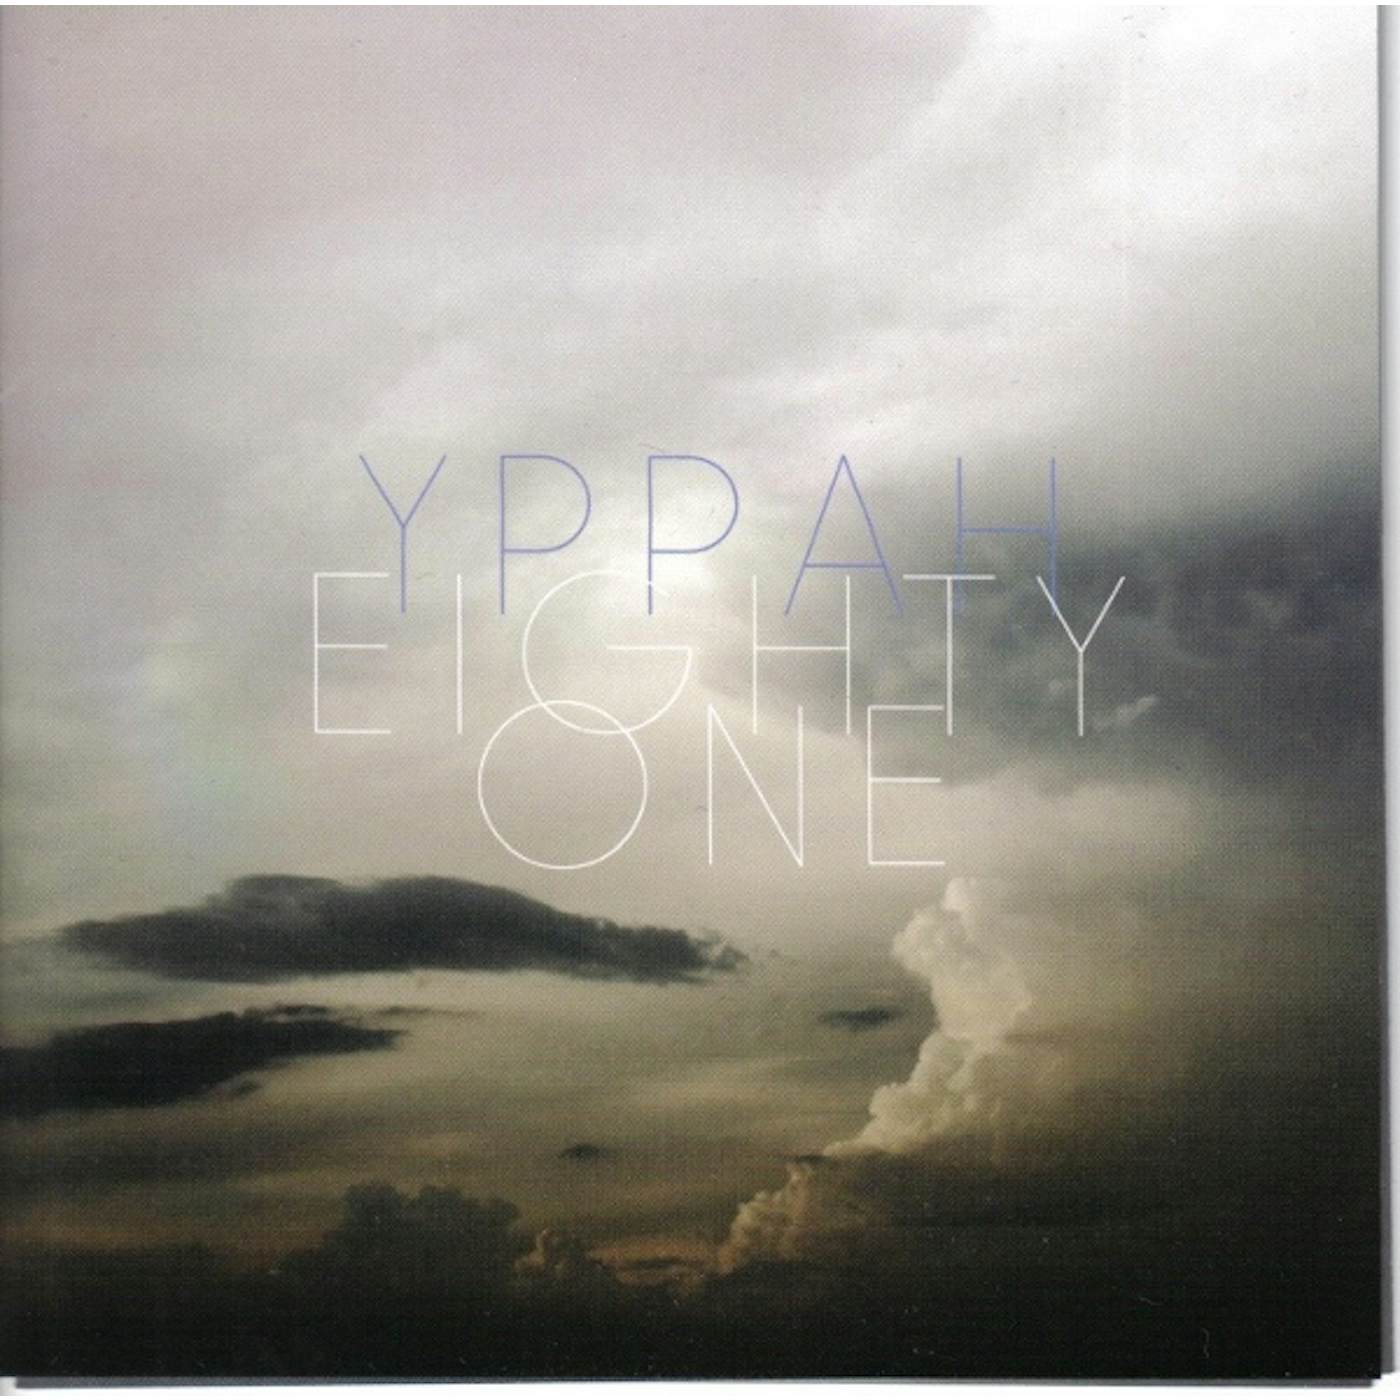 Yppah Eighty One Vinyl Record